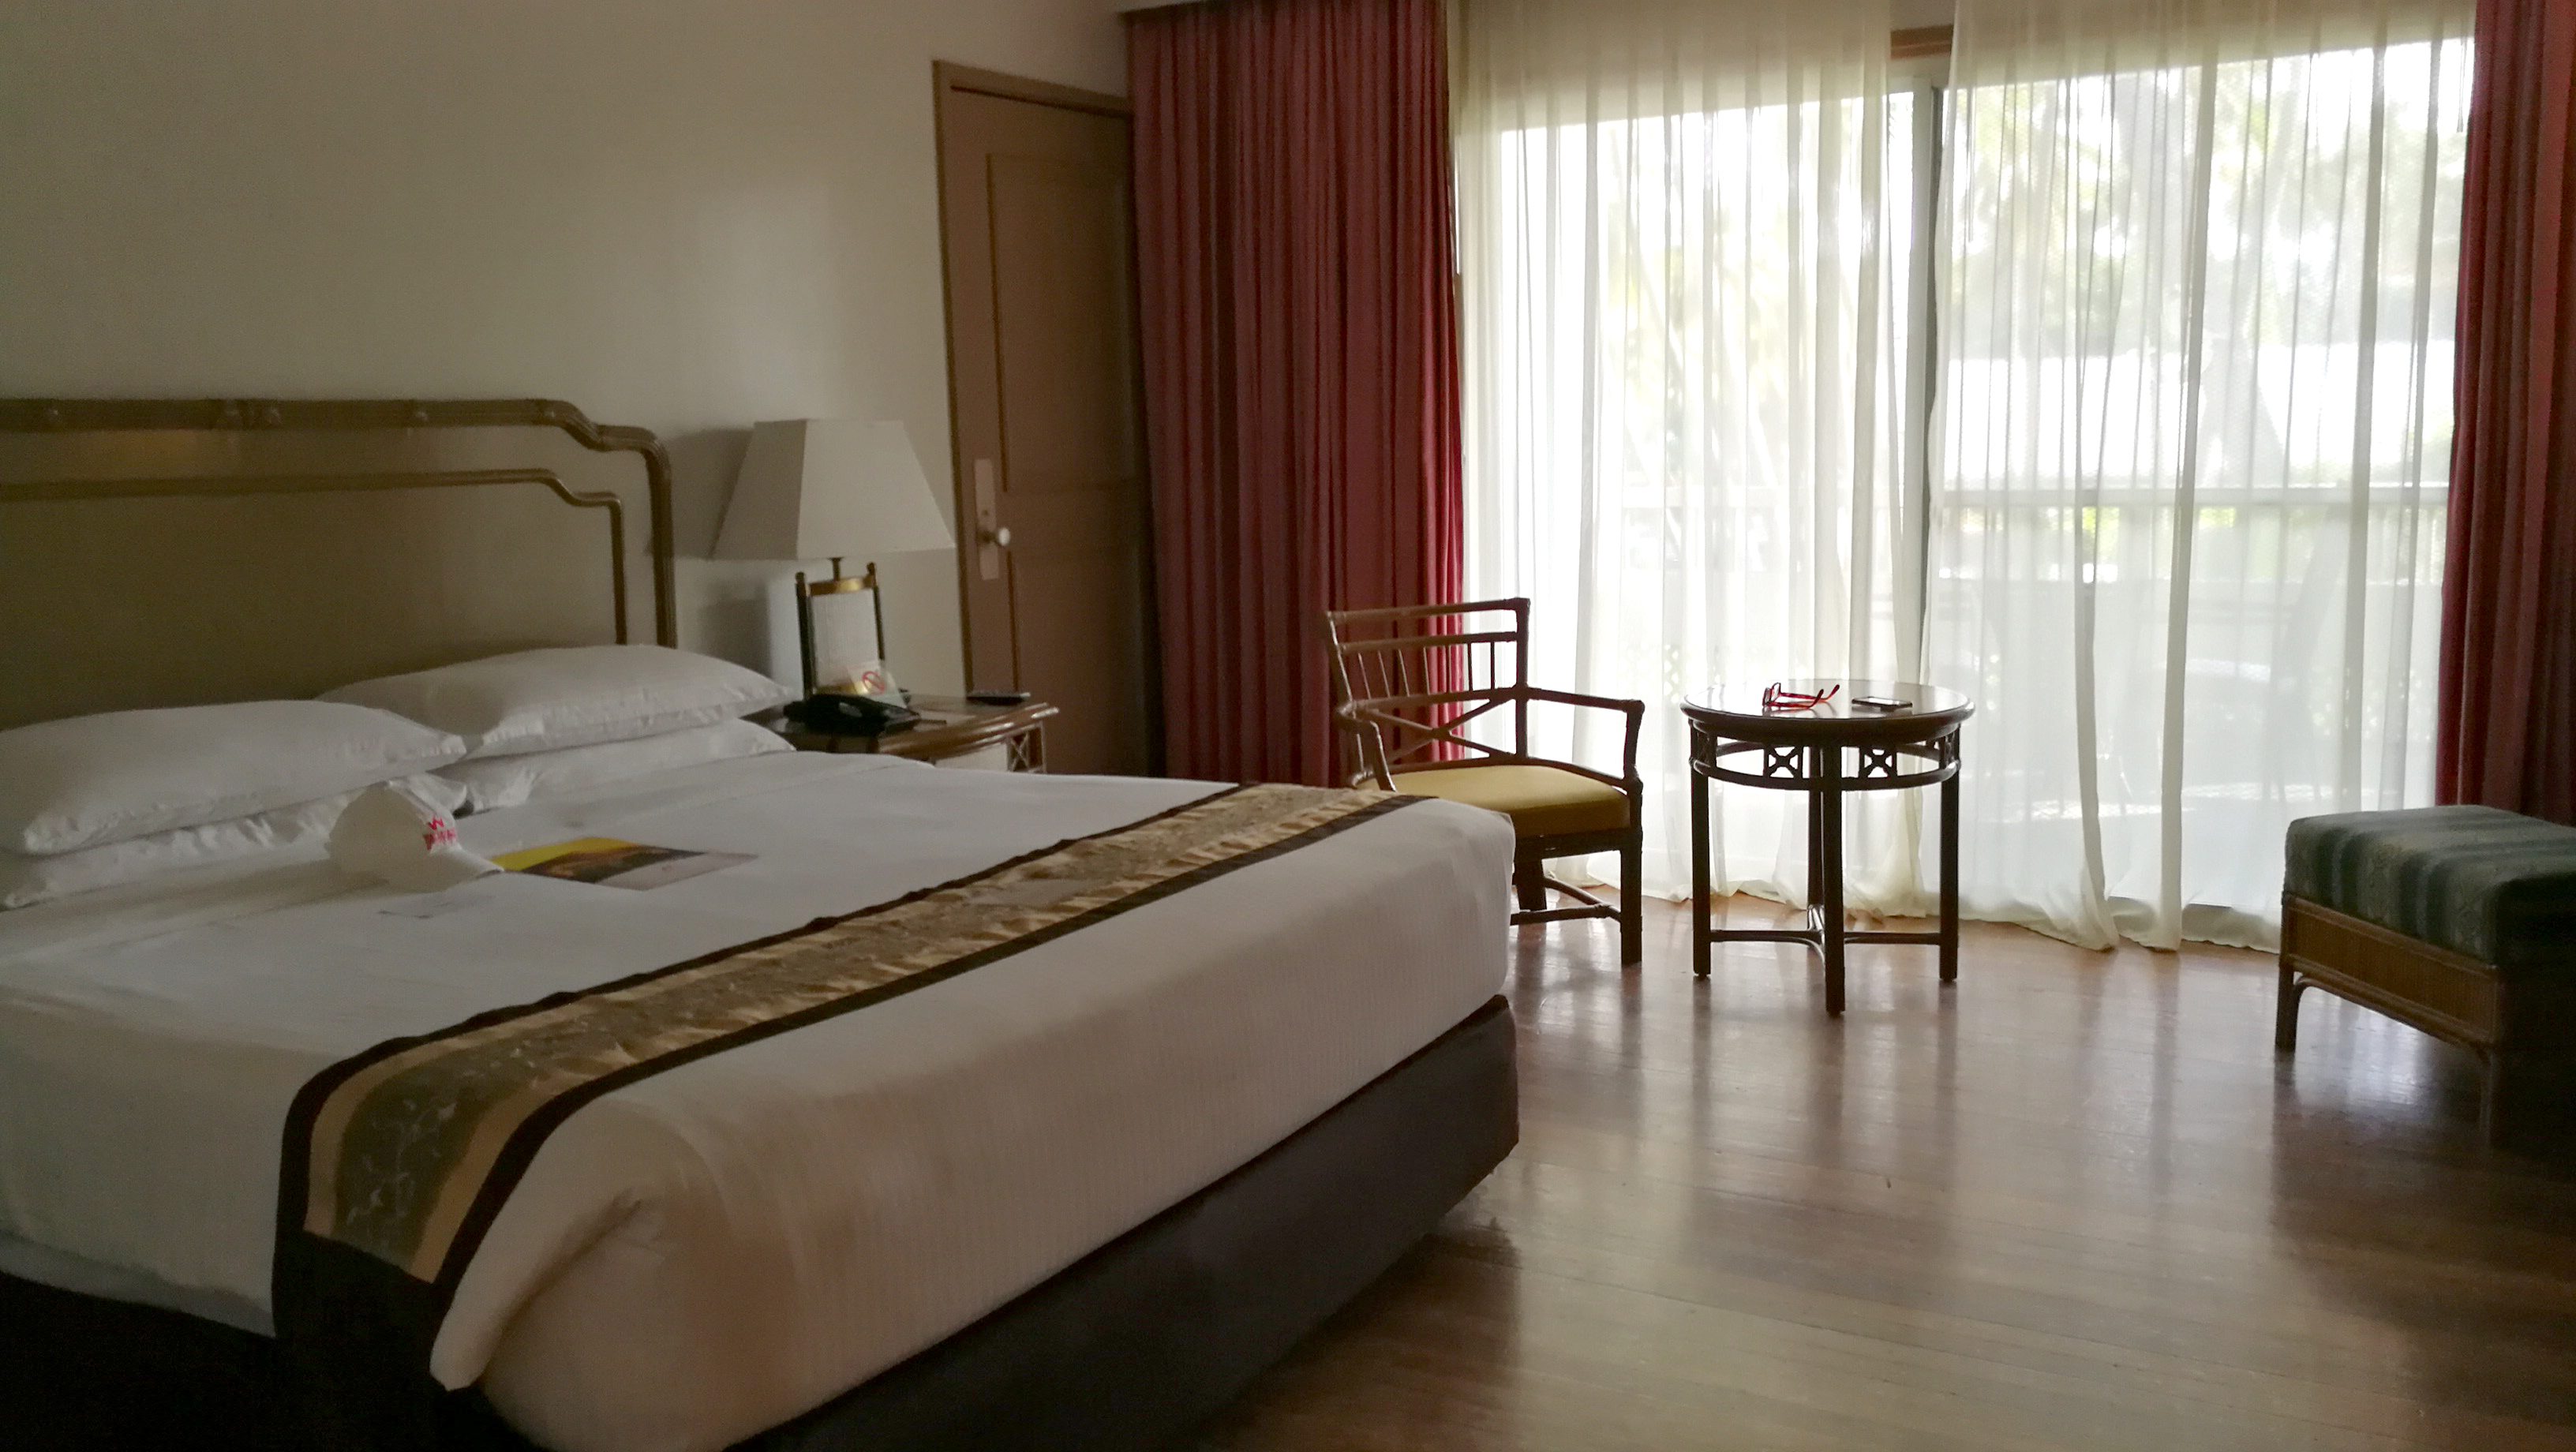 DELUXE ROOM. Spacious accommodations await each hotel guest. Photo by Earnest Mangulabnan Zabala 